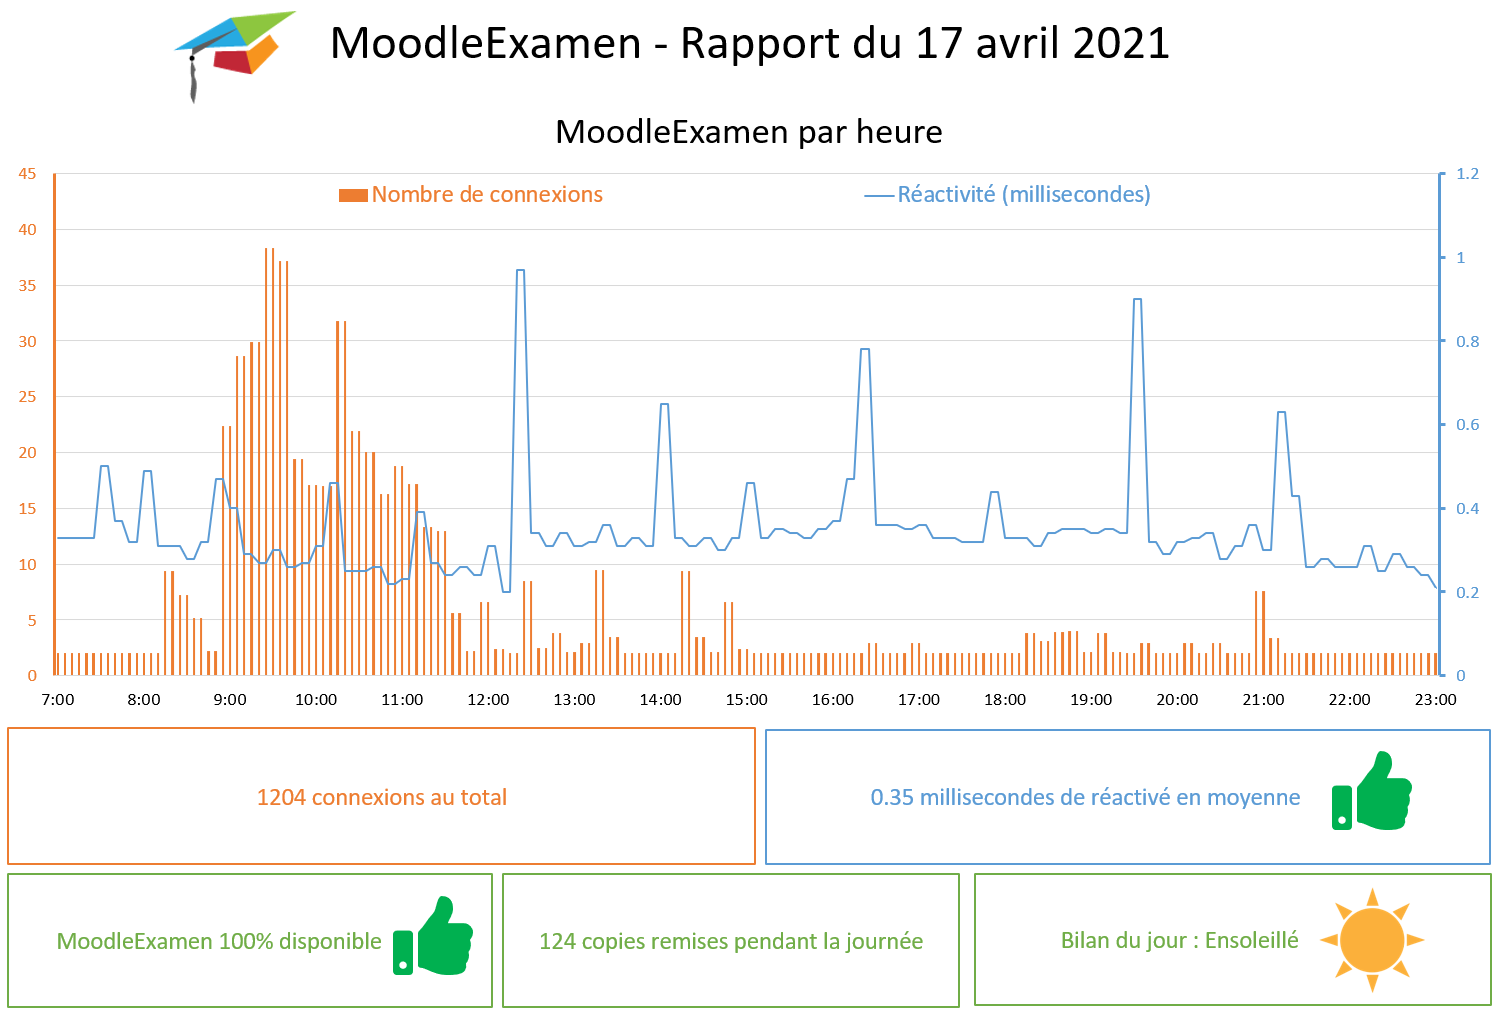 Rapport MoodleExamen 17 avril 2021